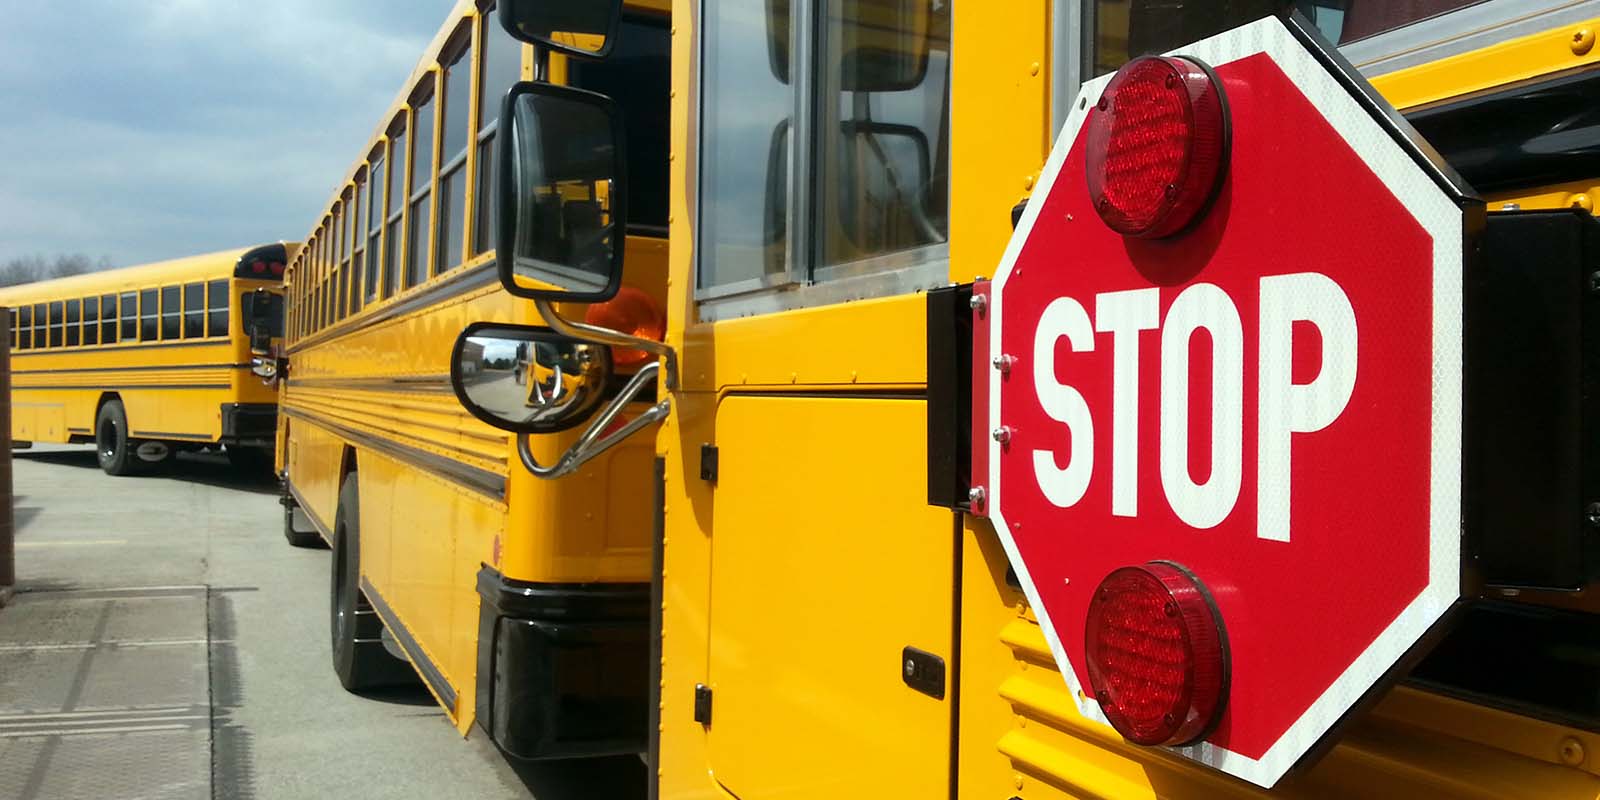 Lamers Bus Lines, Inc. school bus stop sign arm